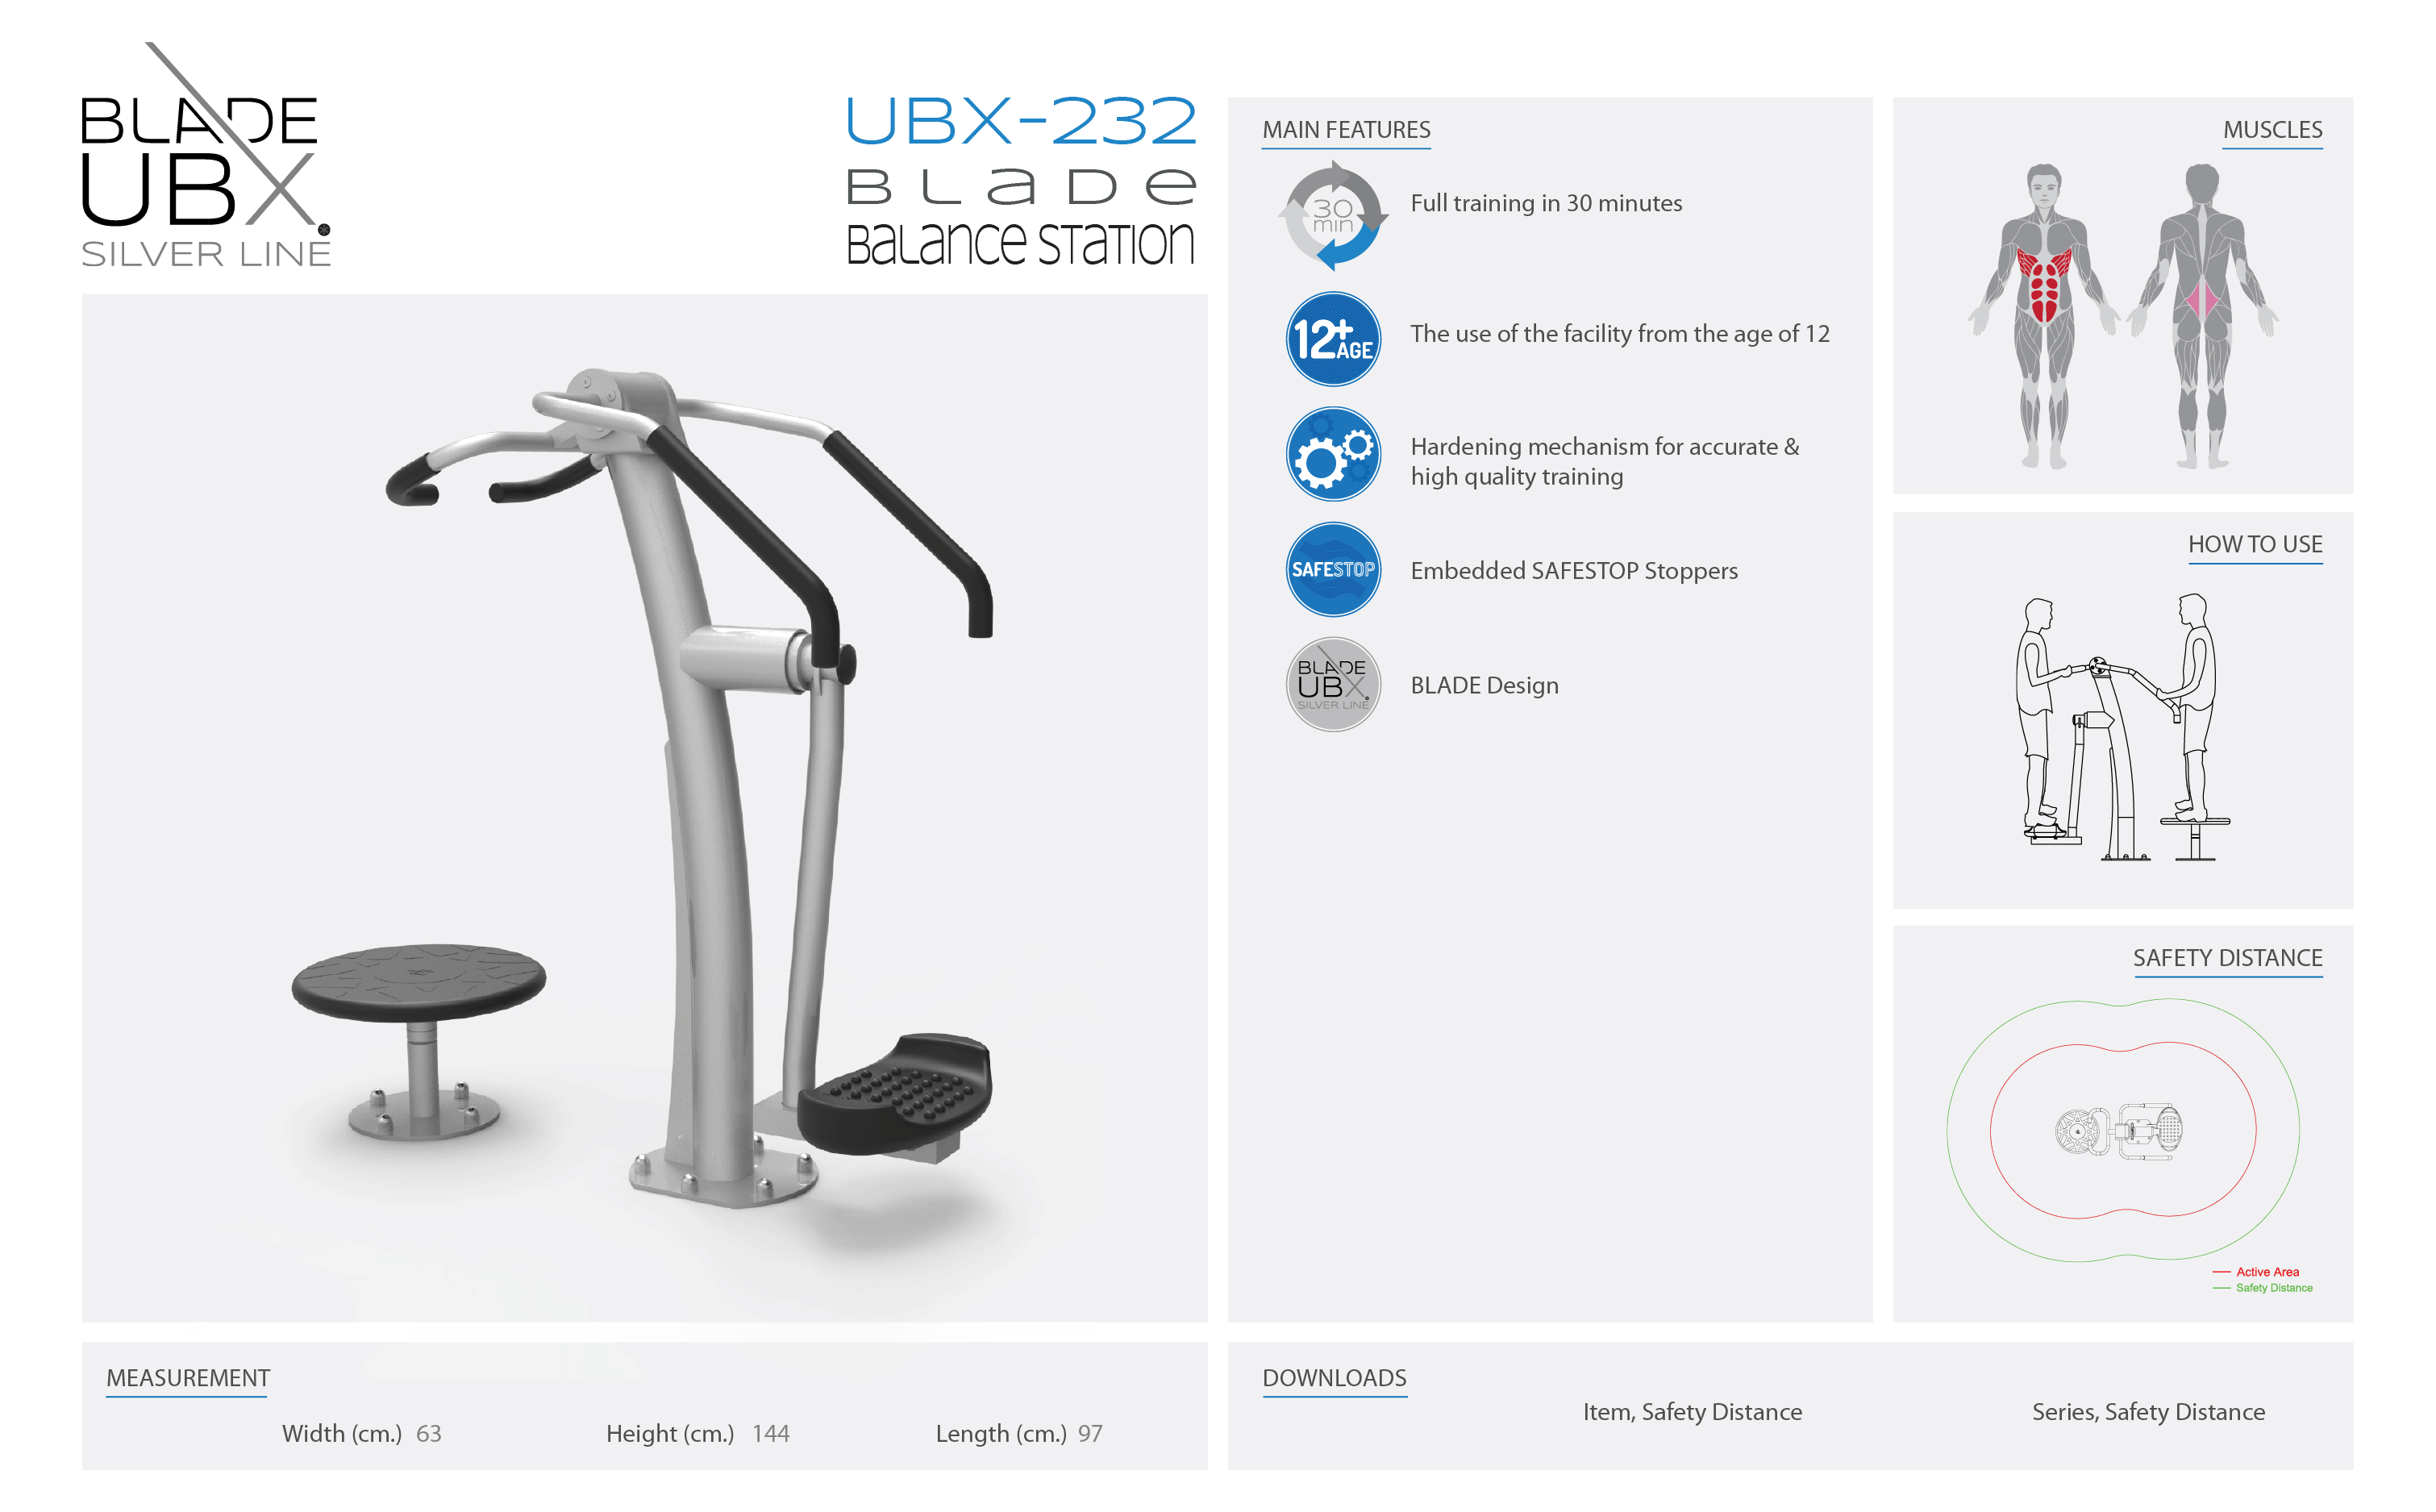 ubx-232 blade balance station -  אורבניקס - מתקן כושר - תחנת איזון להבים